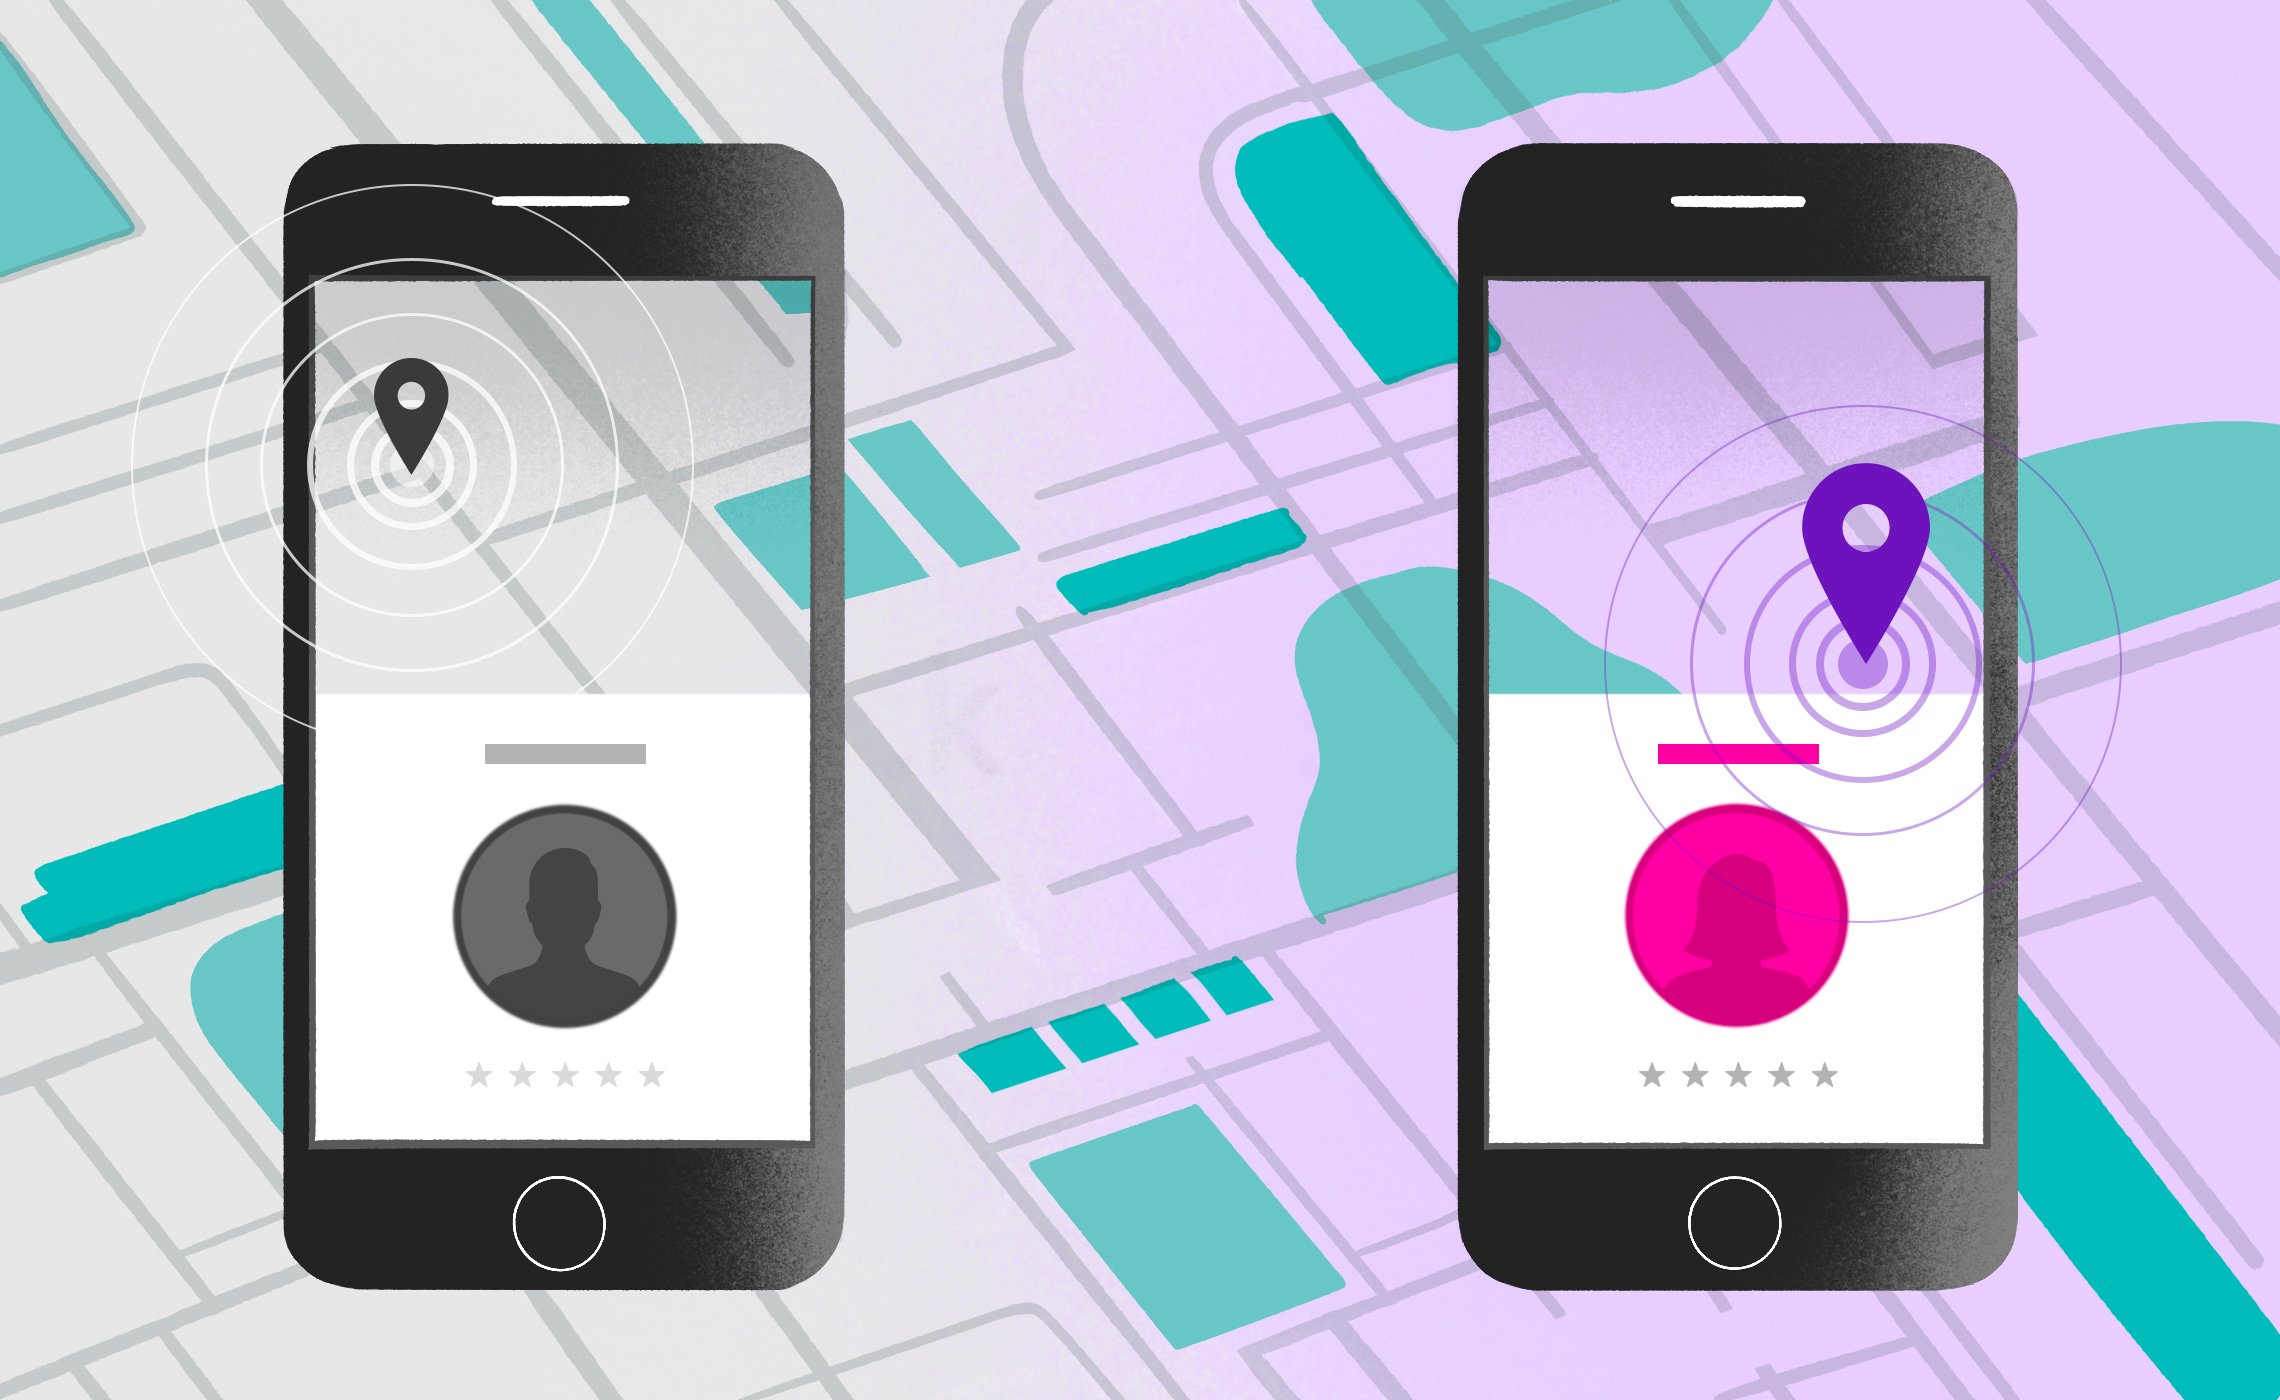 brand design of black Uber app and pink Lyft app